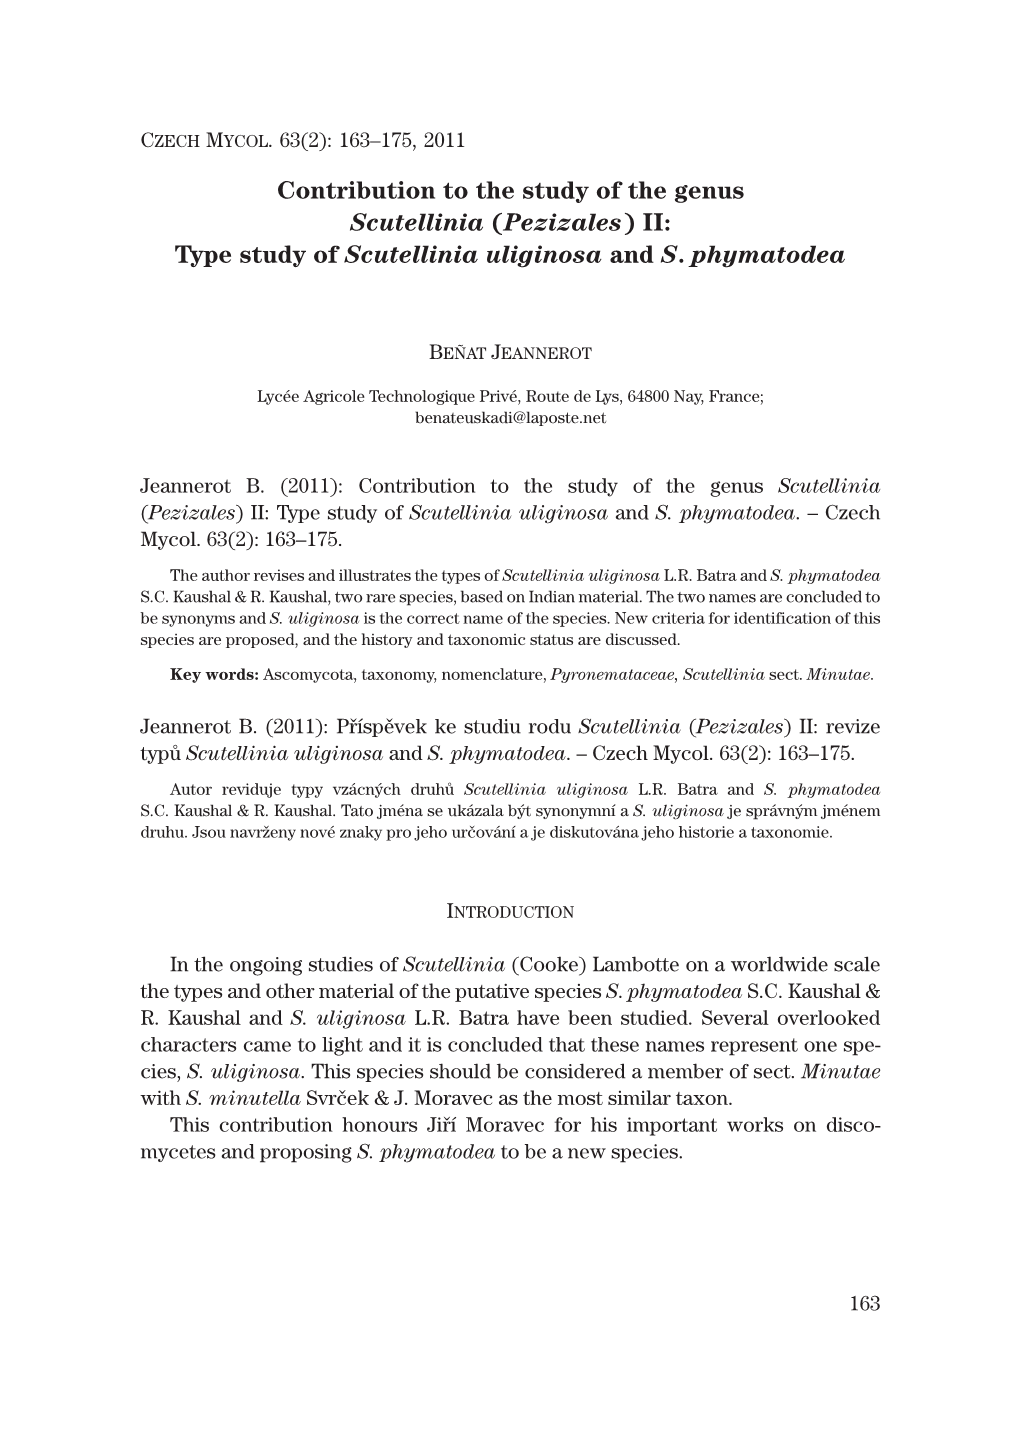 Contribution to the Study of the Genus Scutellinia (Pezizales) II: Type Study of Scutellinia Uliginosa and S